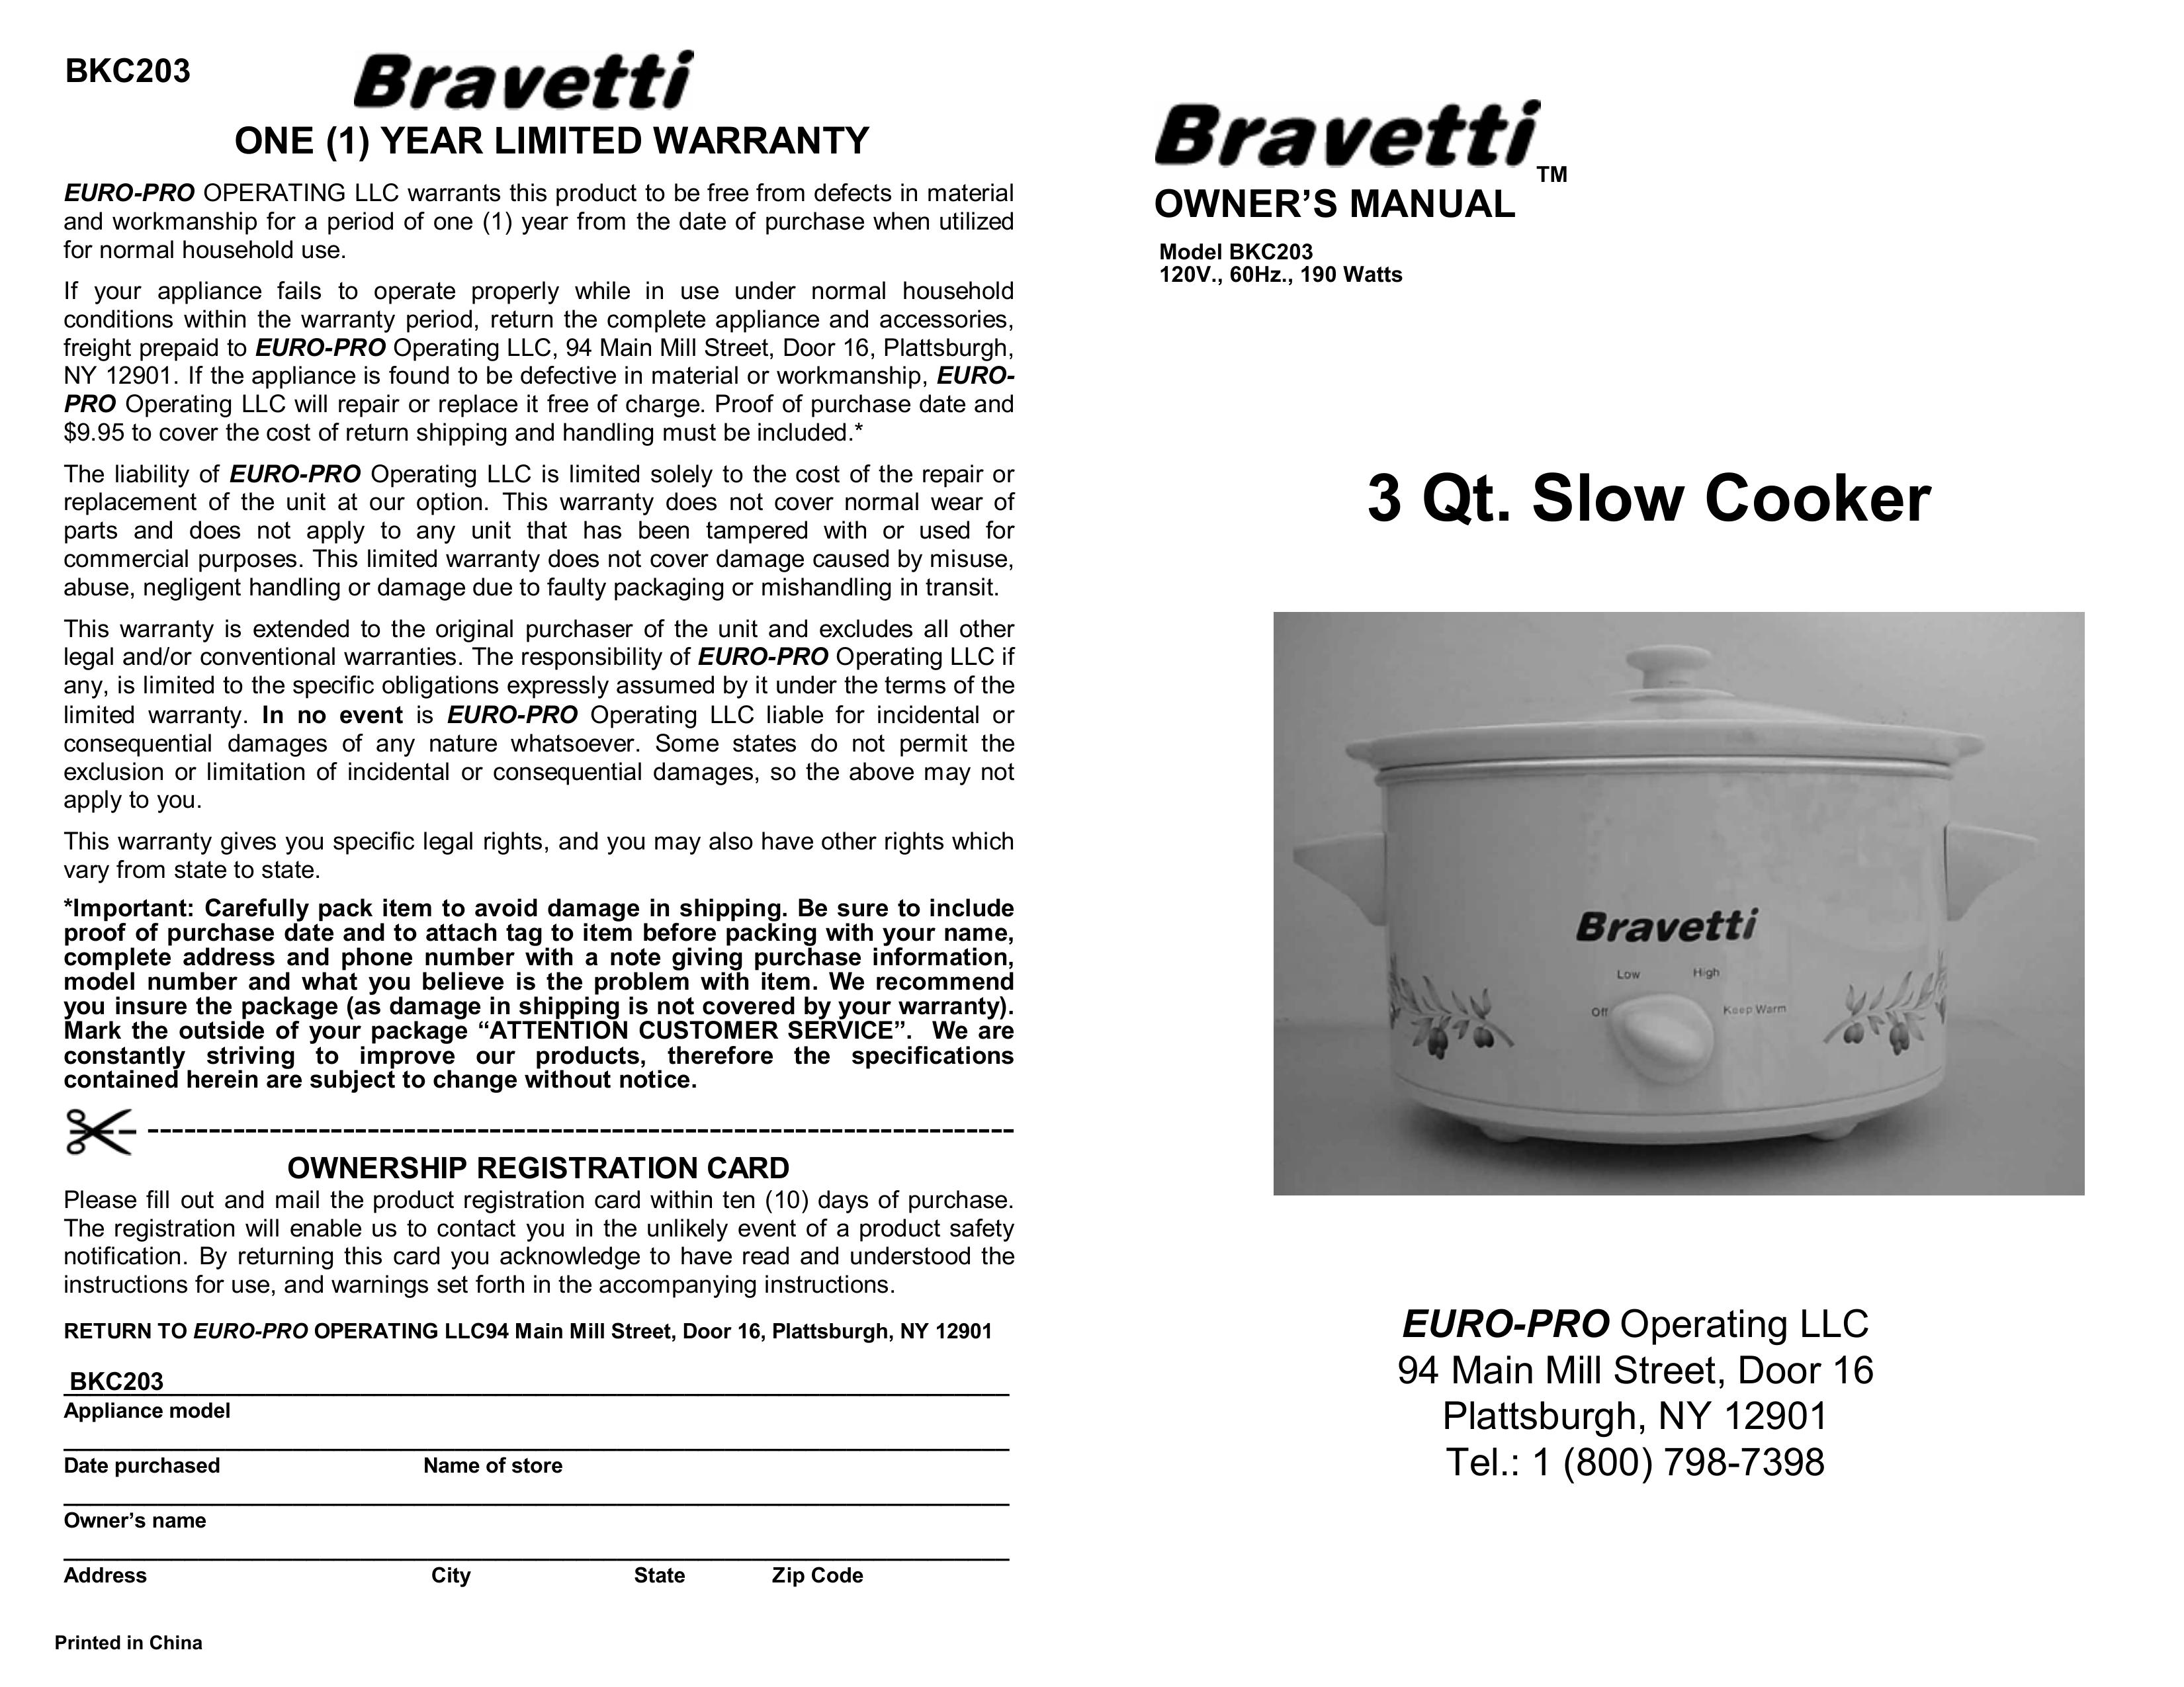 Bravetti BKC203 Slow Cooker User Manual